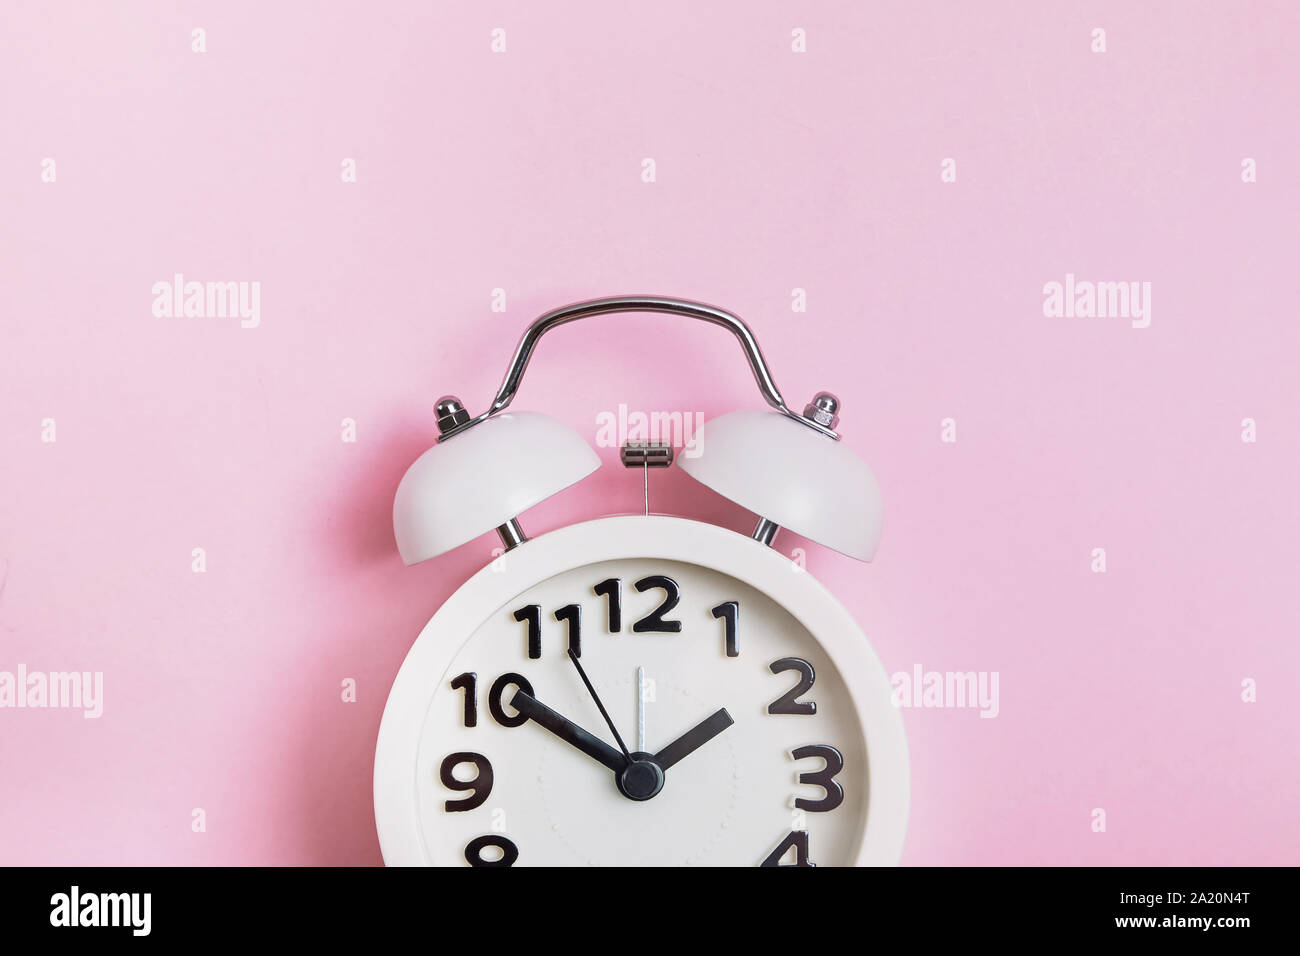 Retro analog alarm clock on pastel pink background Stock Photo